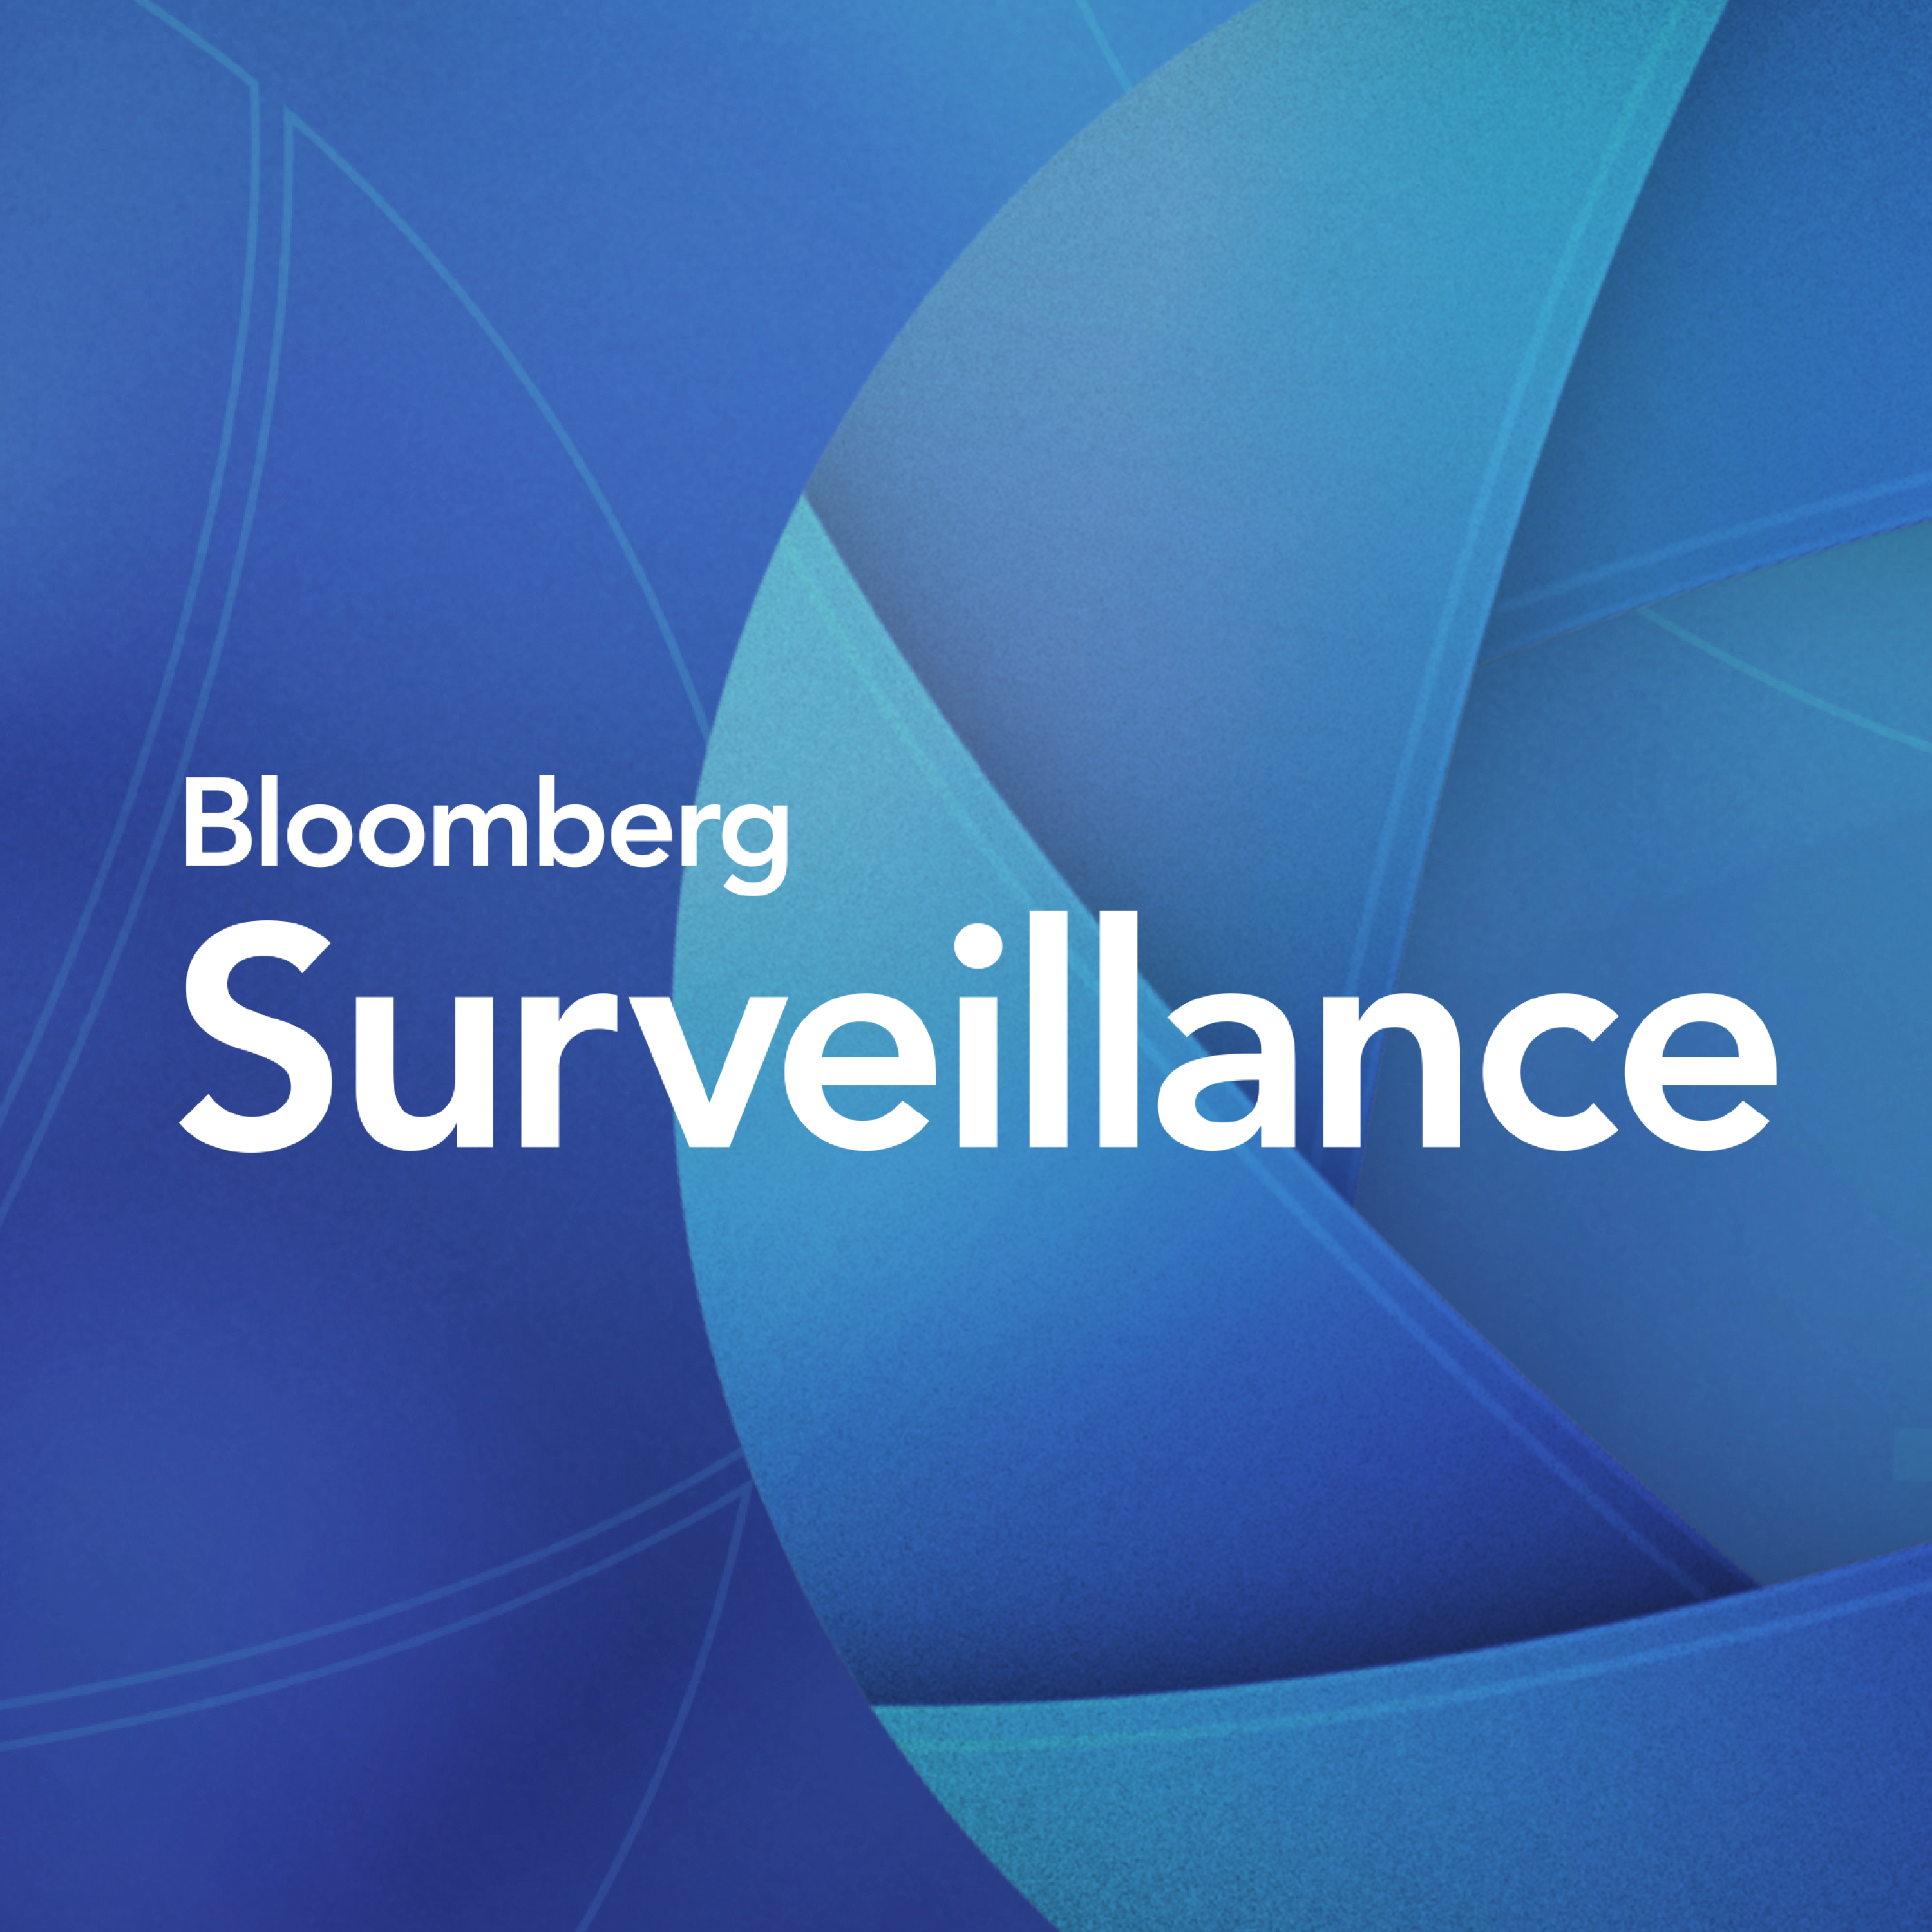 Surveillance: Stock Market Not Insane, Bailin Says